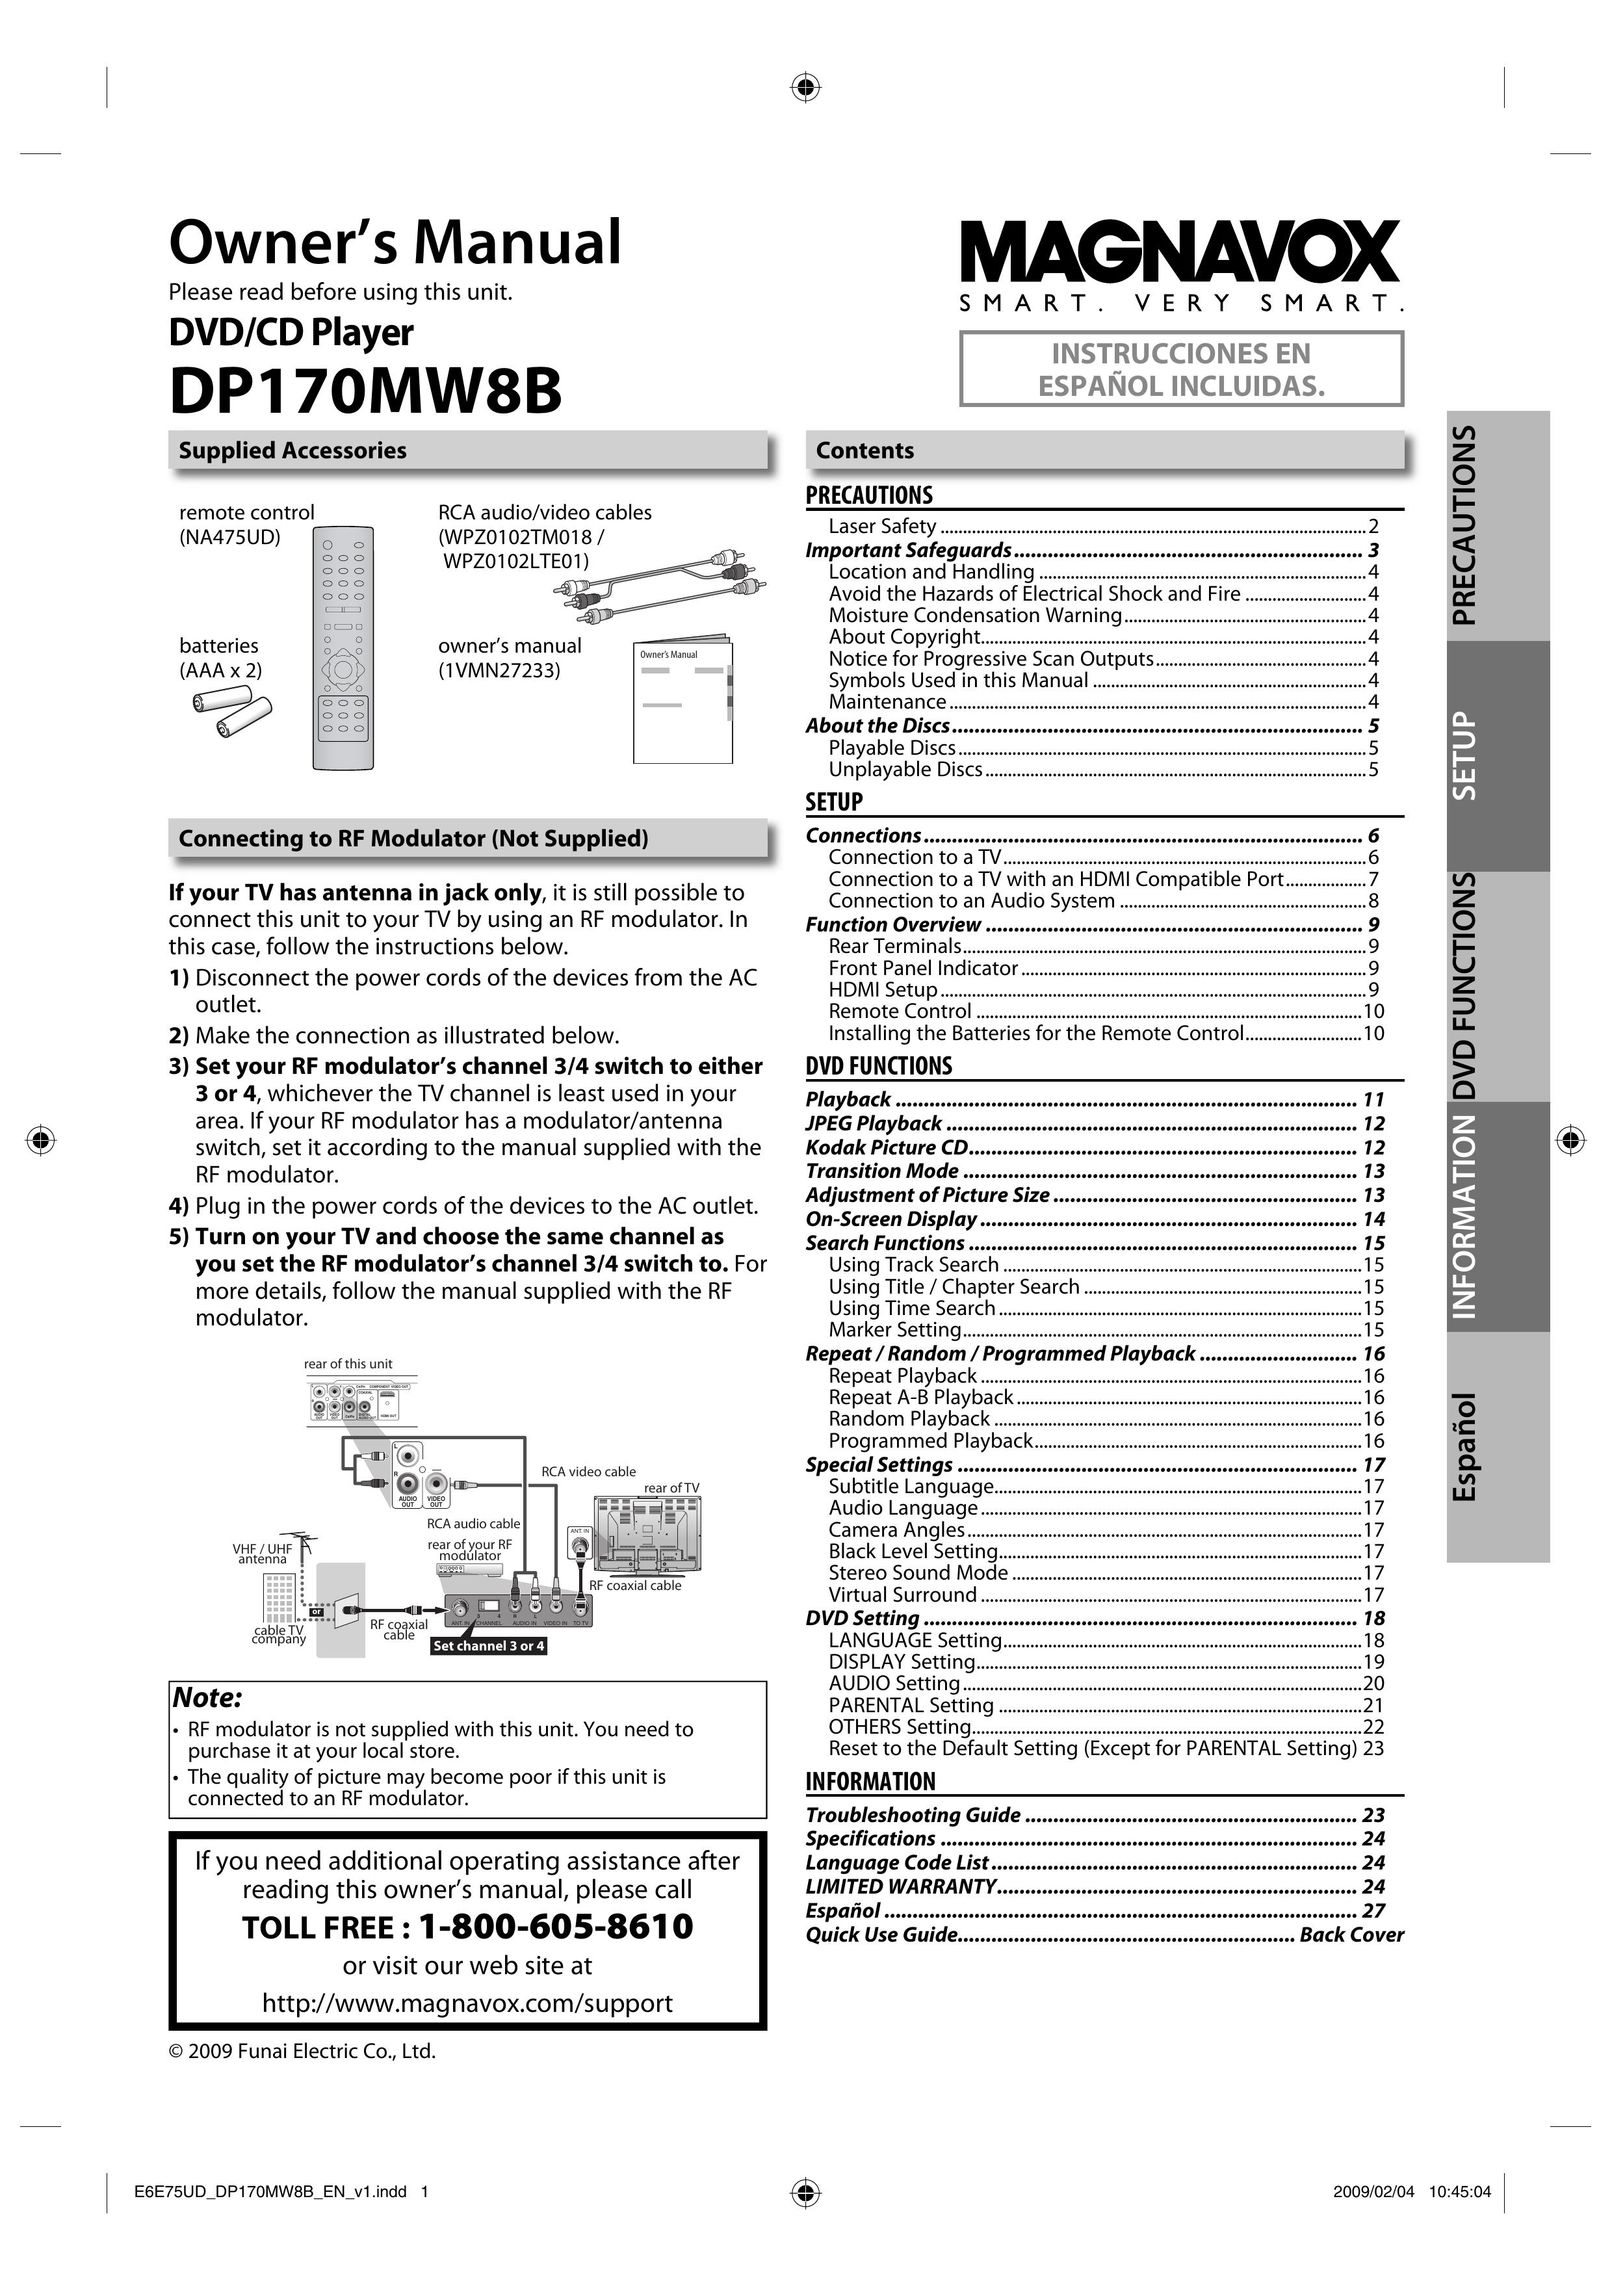 FUNAI DP170MW8B DVD Player User Manual